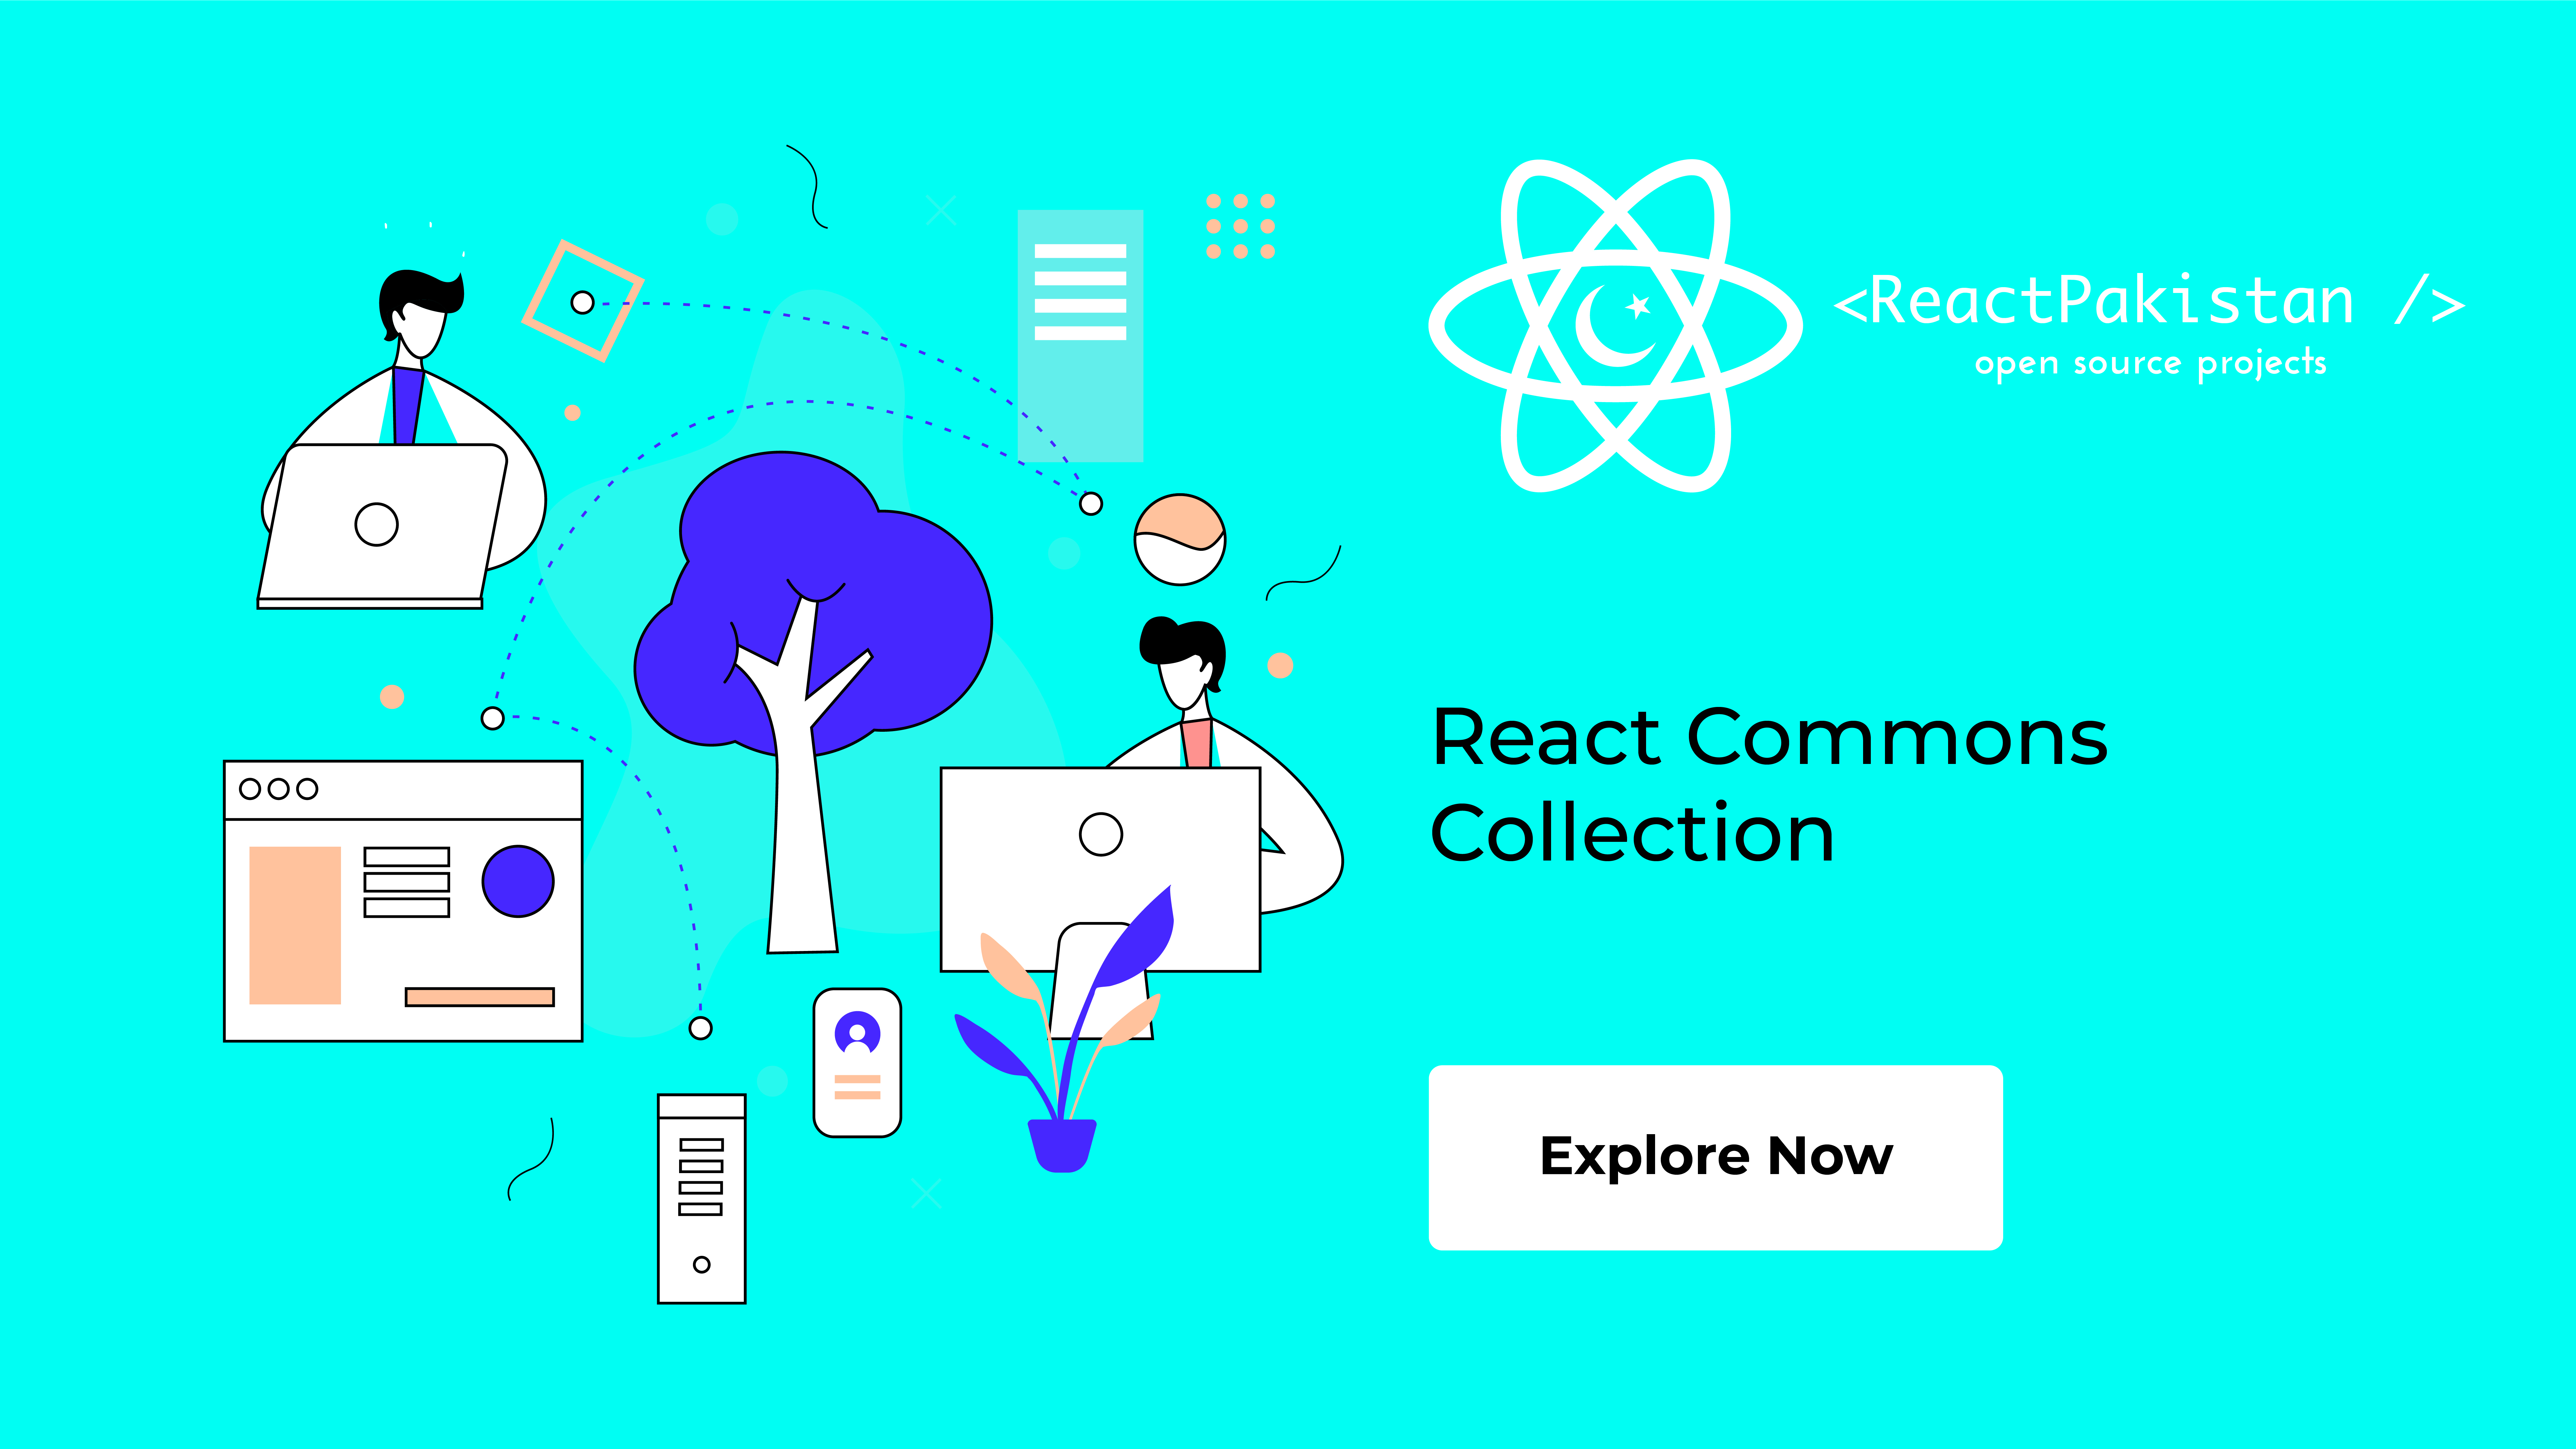 React Pakistan - React Commons Collection